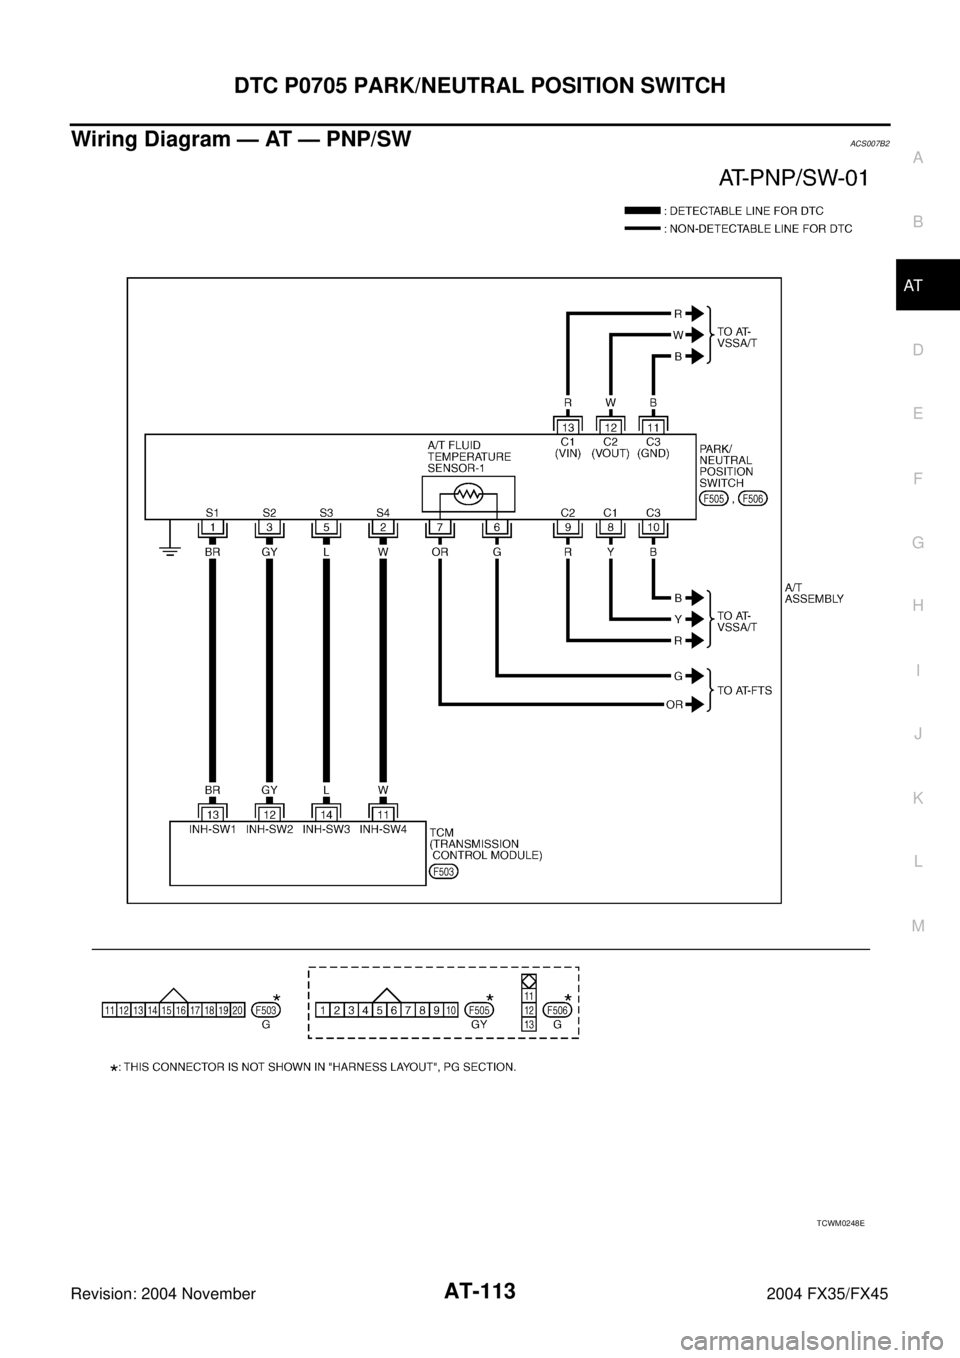 INFINITI FX35 2004  Service Manual DTC P0705 PARK/NEUTRAL POSITION SWITCH
AT-113
D
E
F
G
H
I
J
K
L
MA
B
AT
Revision: 2004 November 2004 FX35/FX45
Wiring Diagram — AT — PNP/SWACS007B2
TCWM0248E 